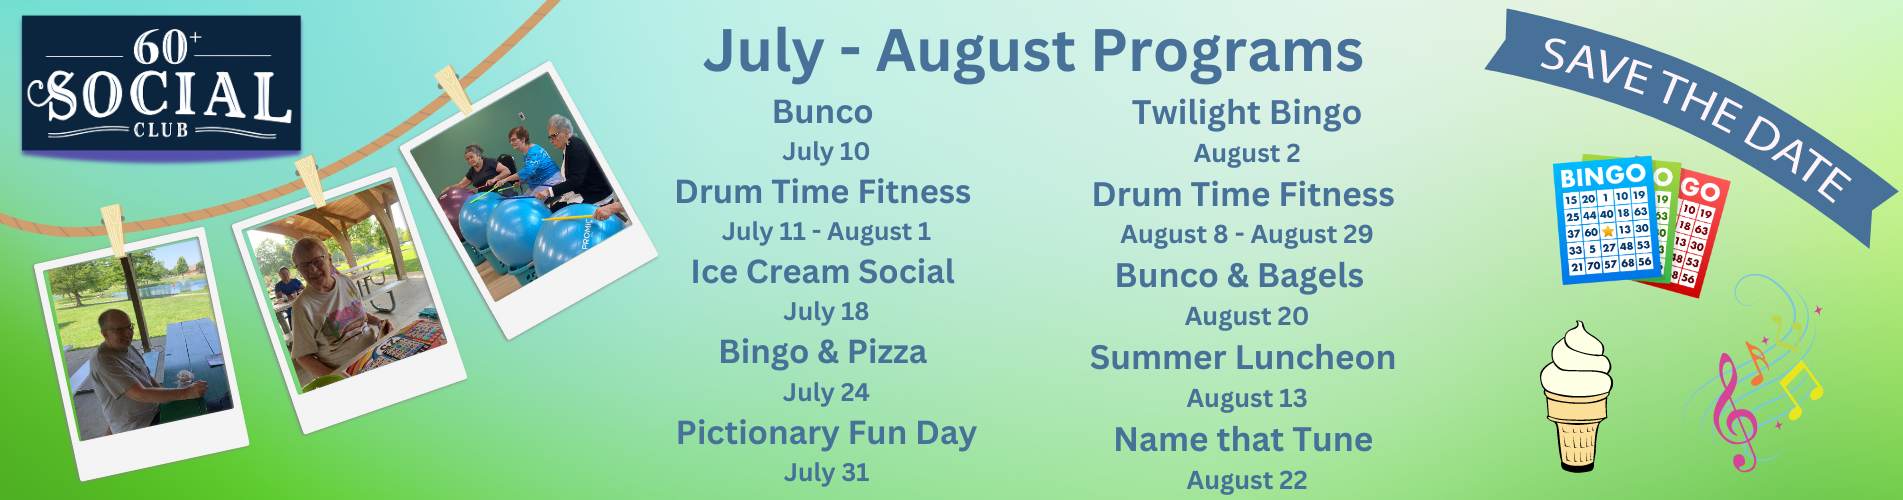 60+ Social Club - July-August Programs